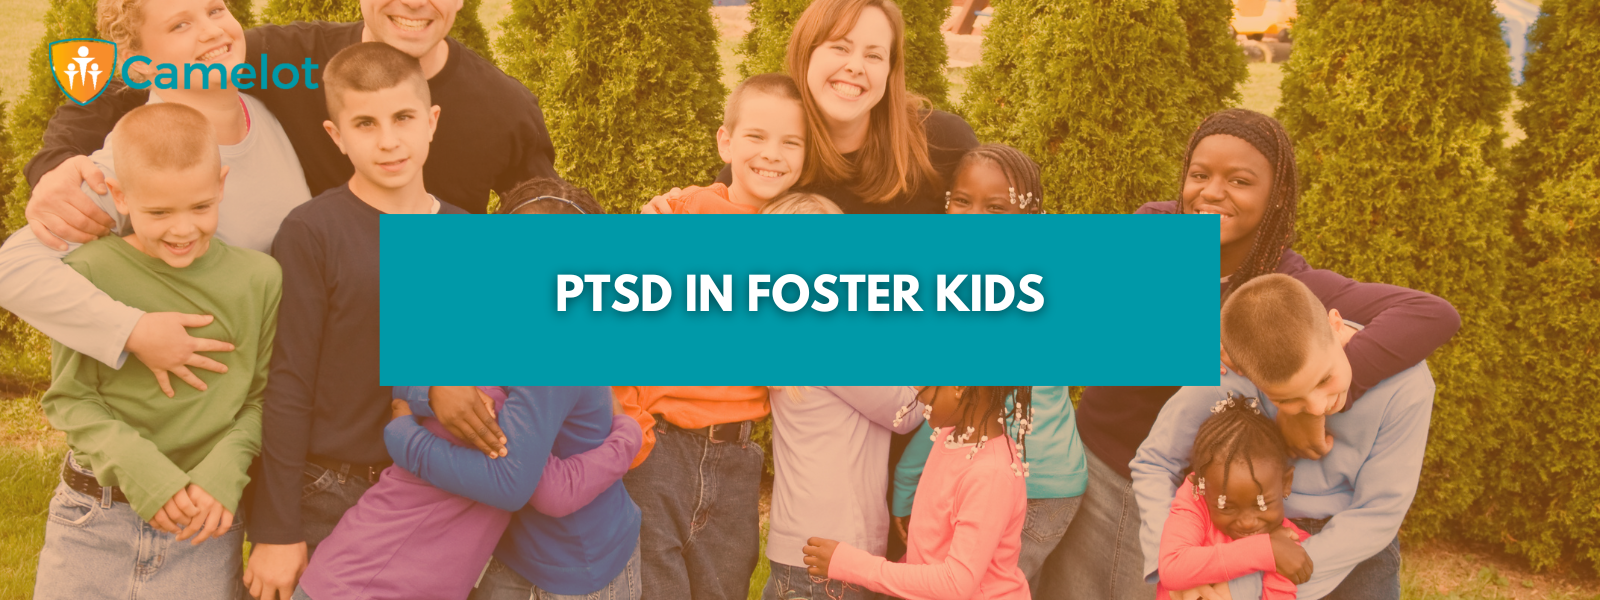 PTSD in foster kids